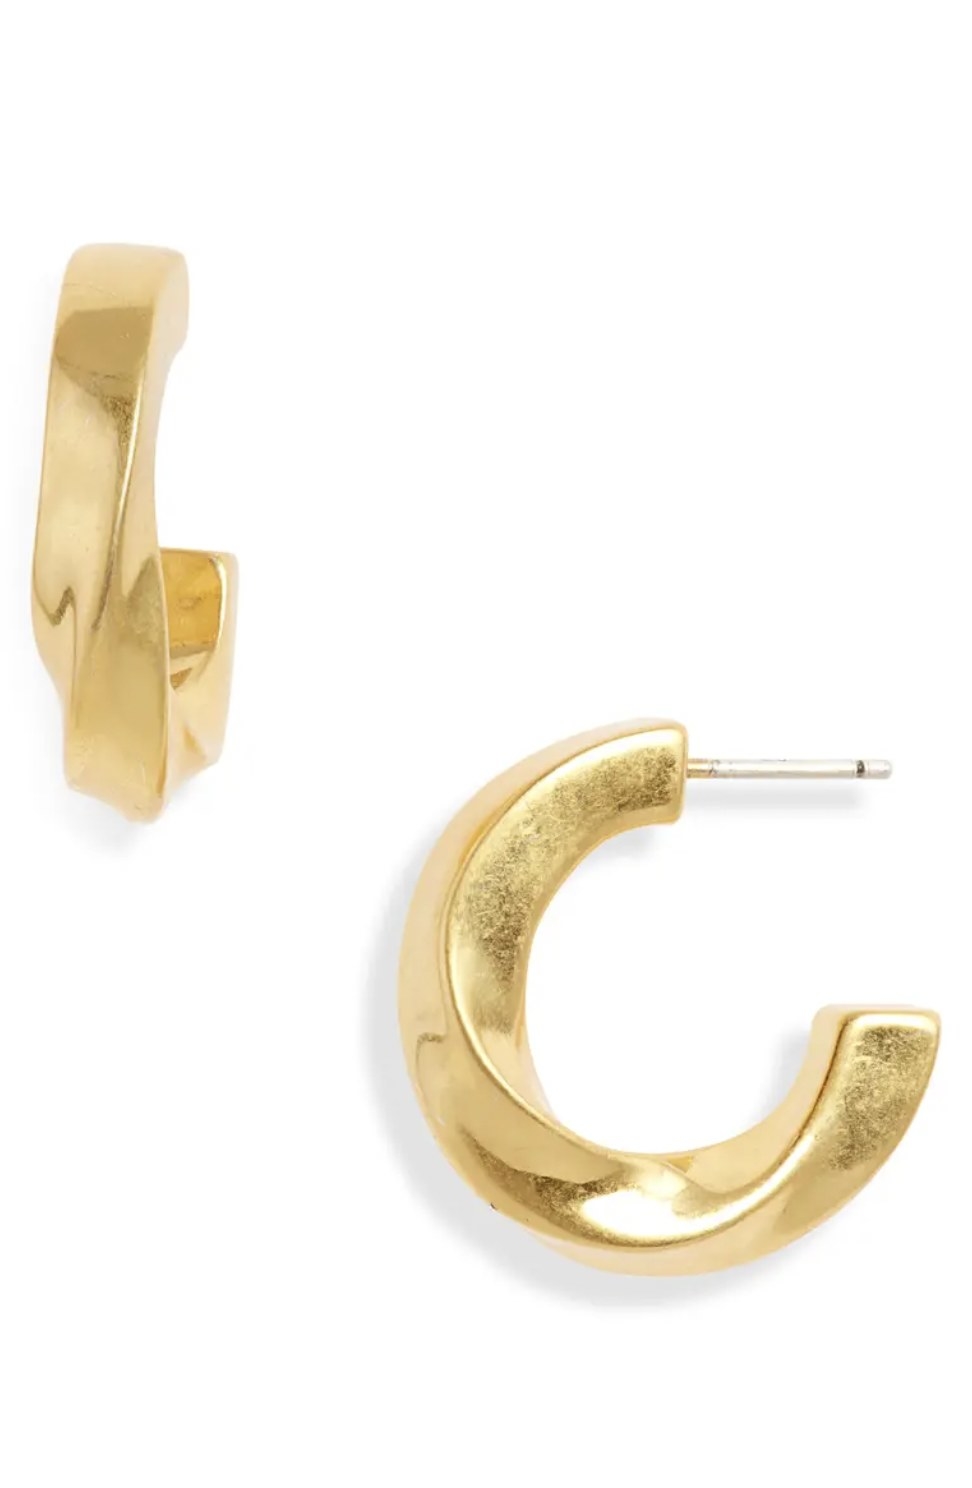 The gold earrings